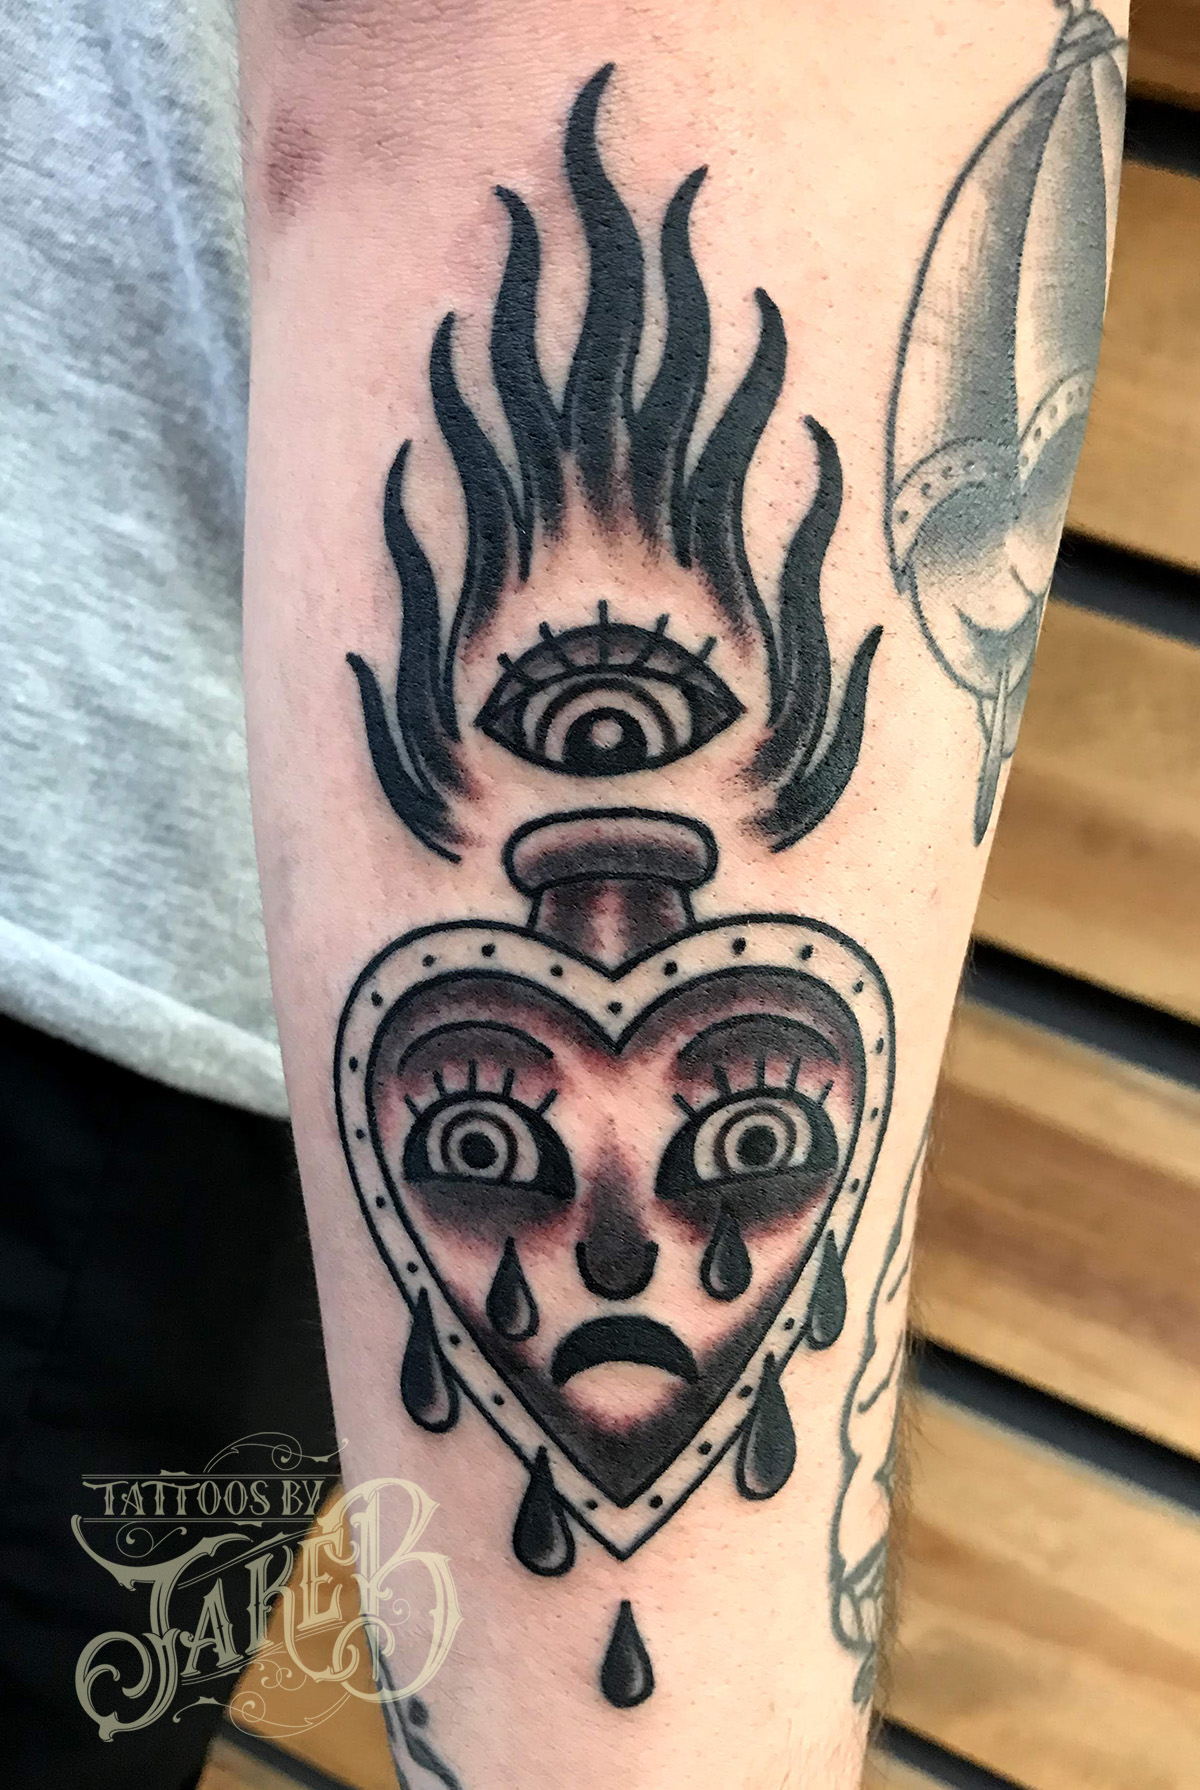 Crying Heart Tattoo - Tattoos by Jake B